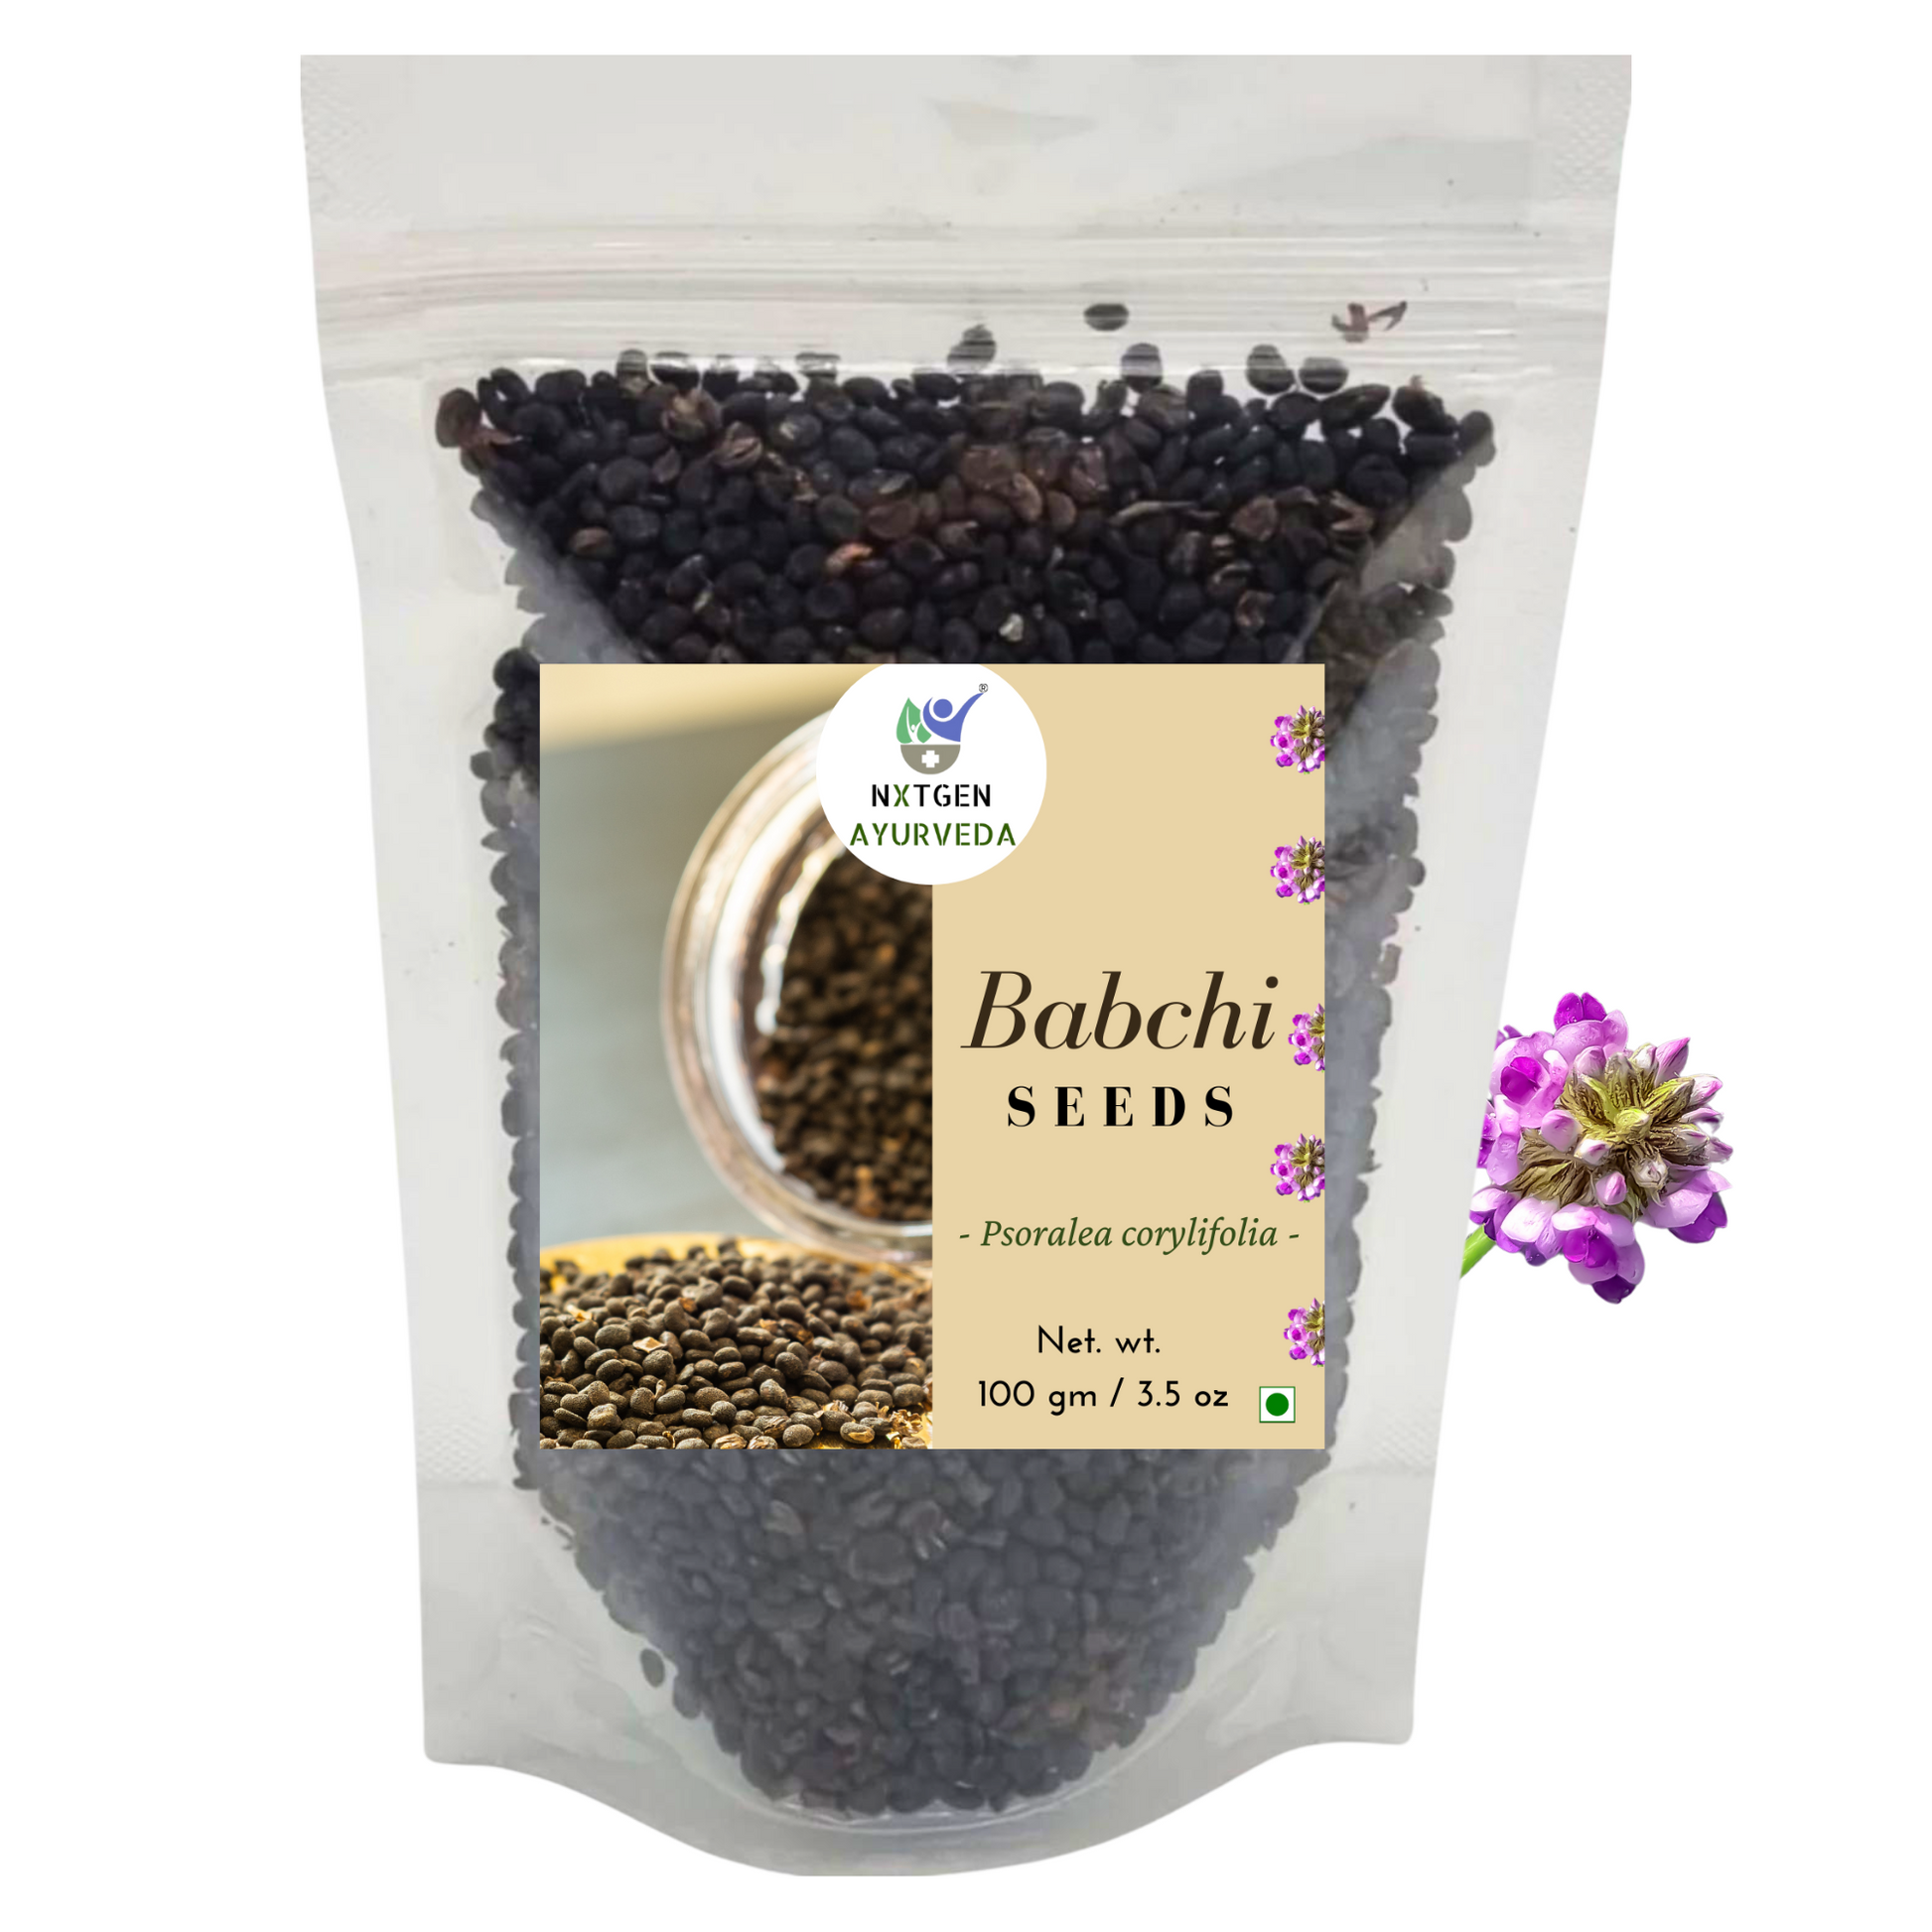 Babchi seeds edible